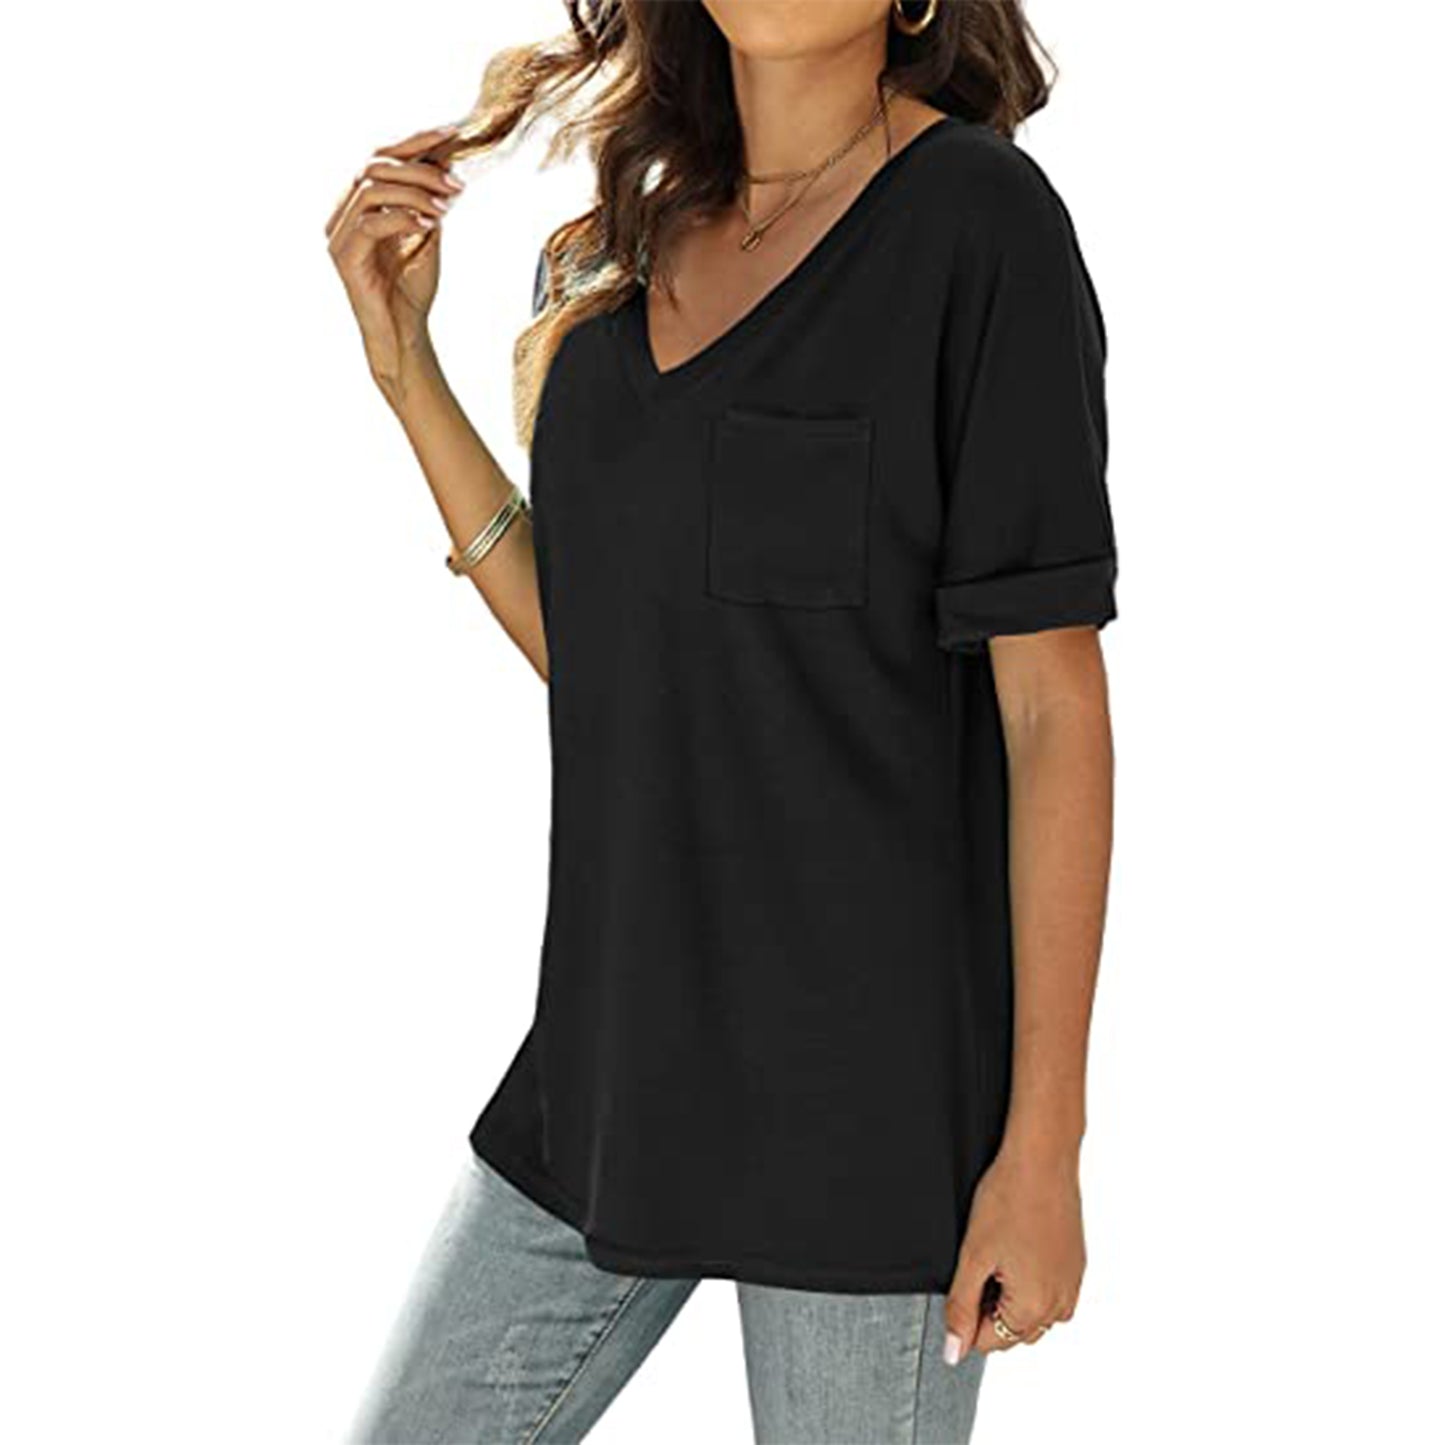 SINCHA Women's Short Sleeve V-Neck Tee T-Shirt